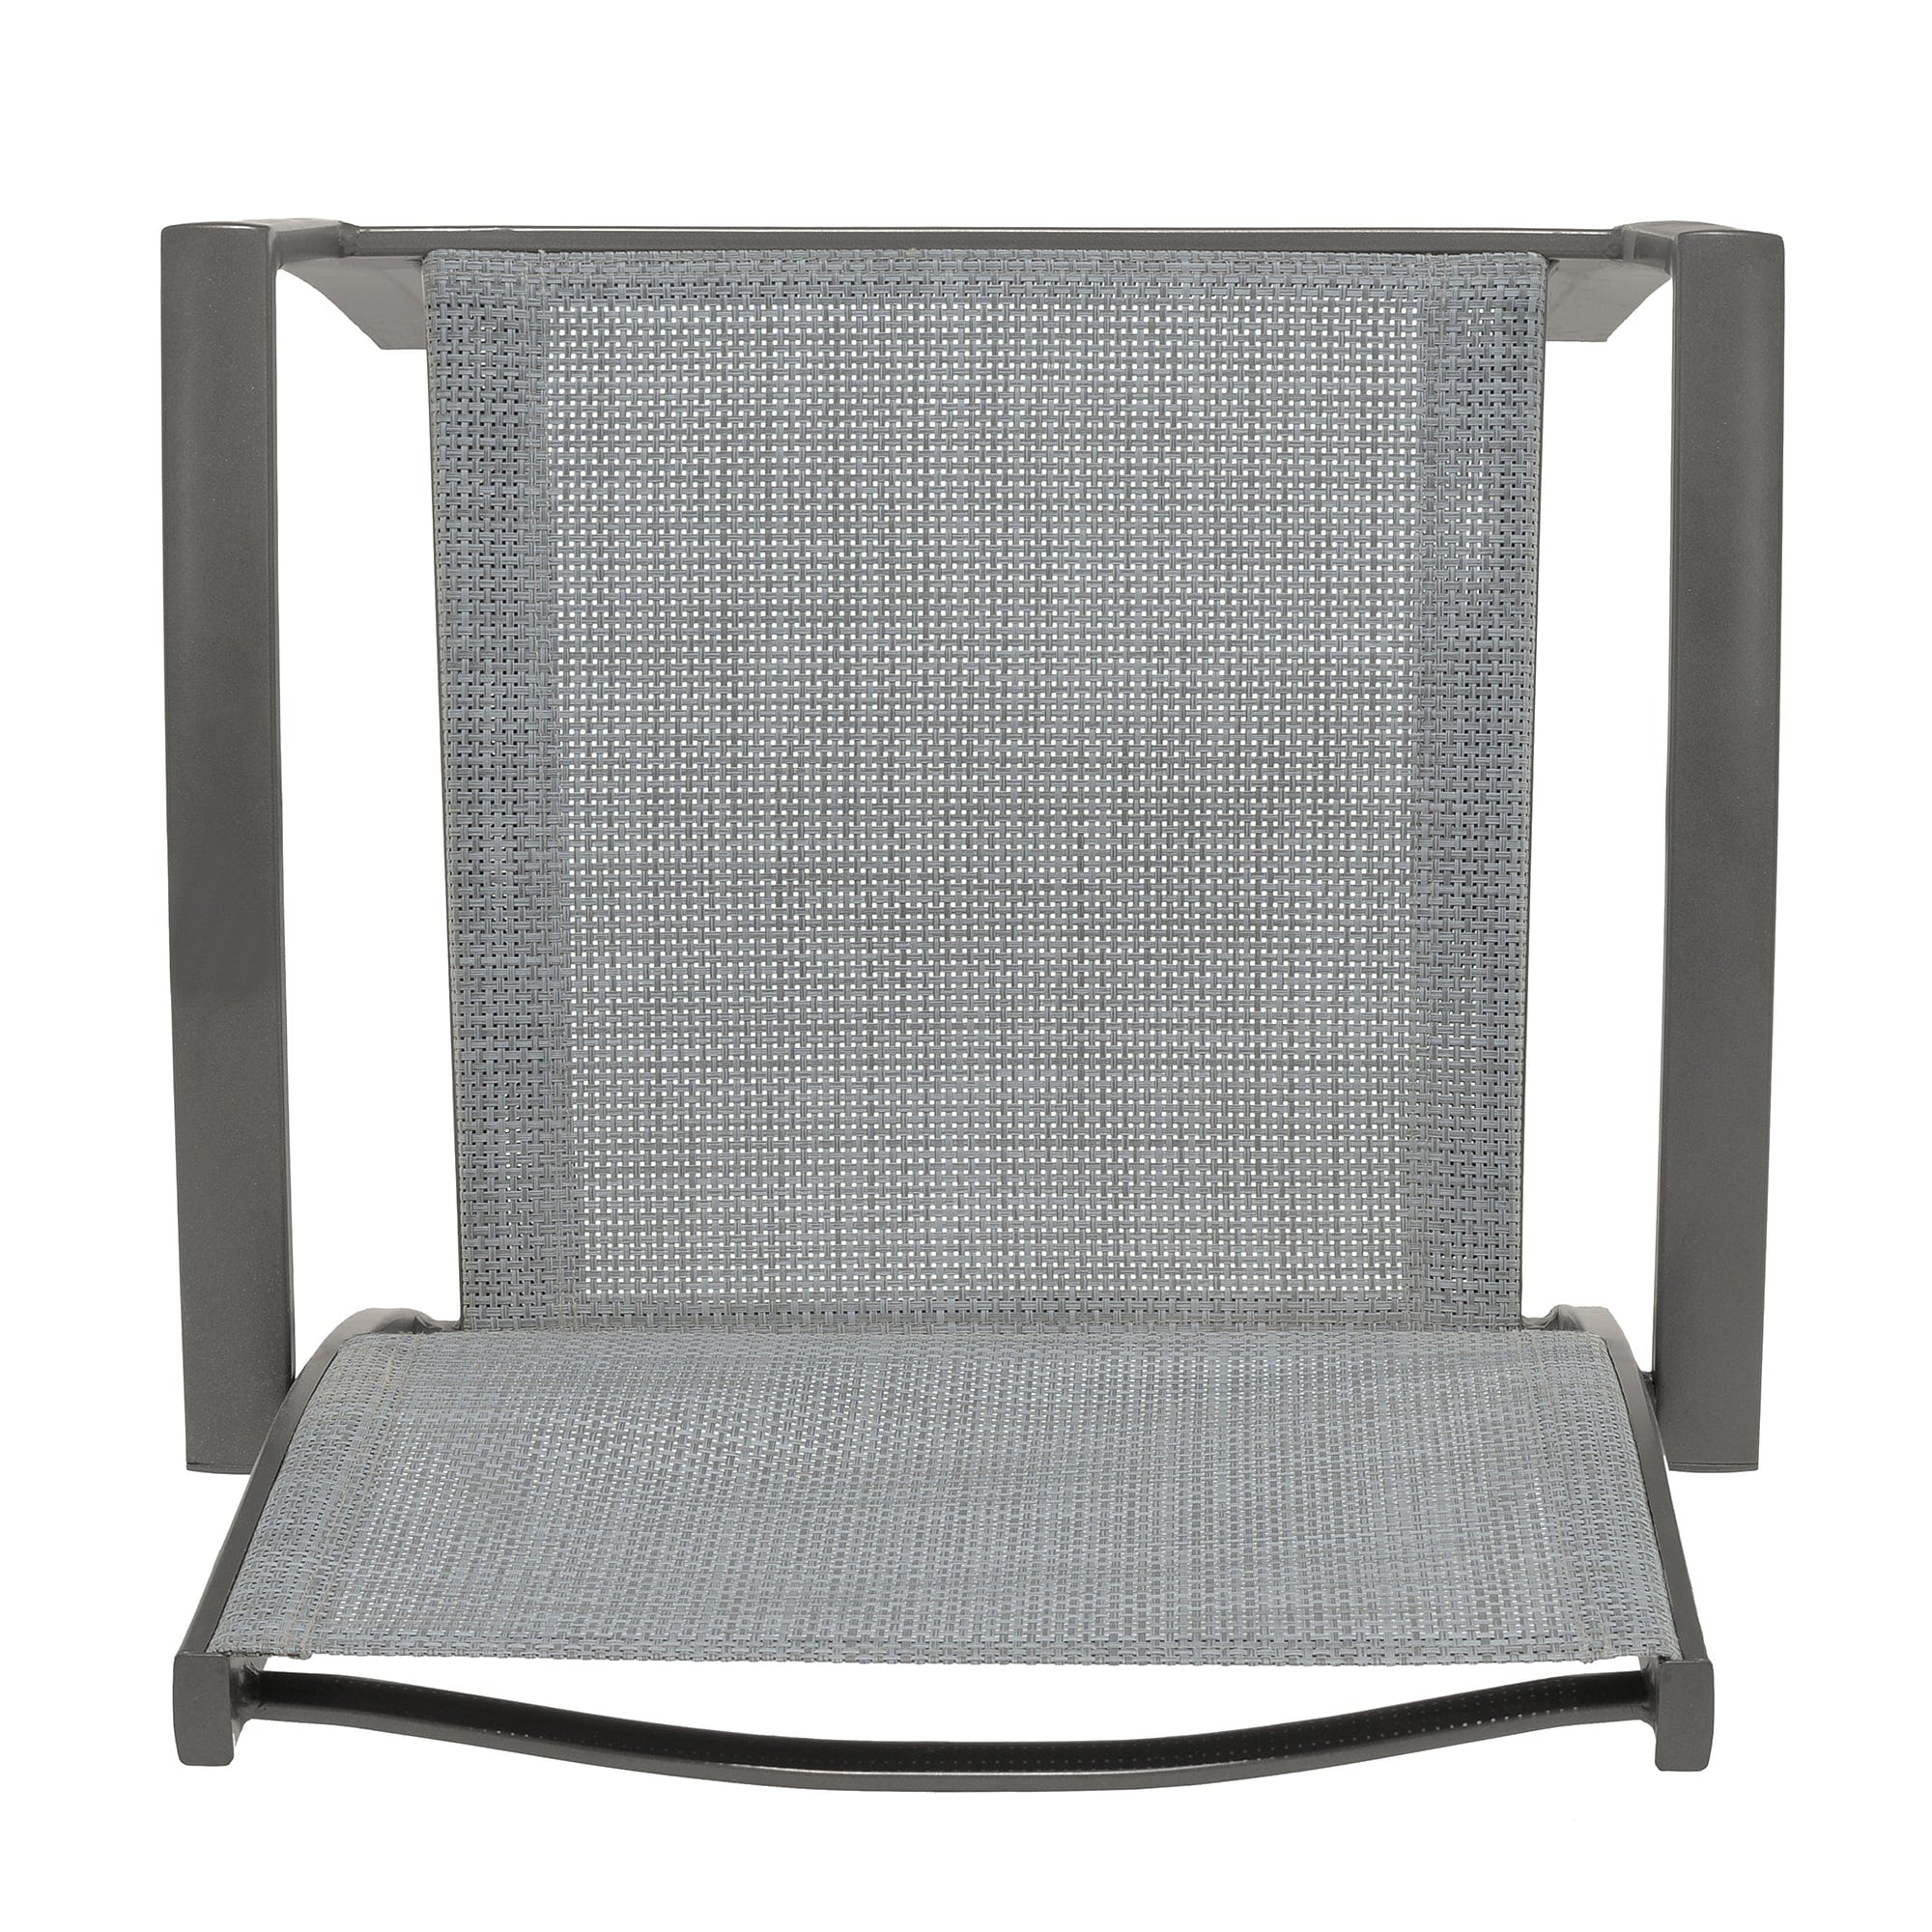 Armen Living Outdoor Dining Chairs Armen Living | Solana Outdoor Aluminum Arm Dining Chairs in Cosmos Grey Finish - Set of 2 | LCSLCHGR